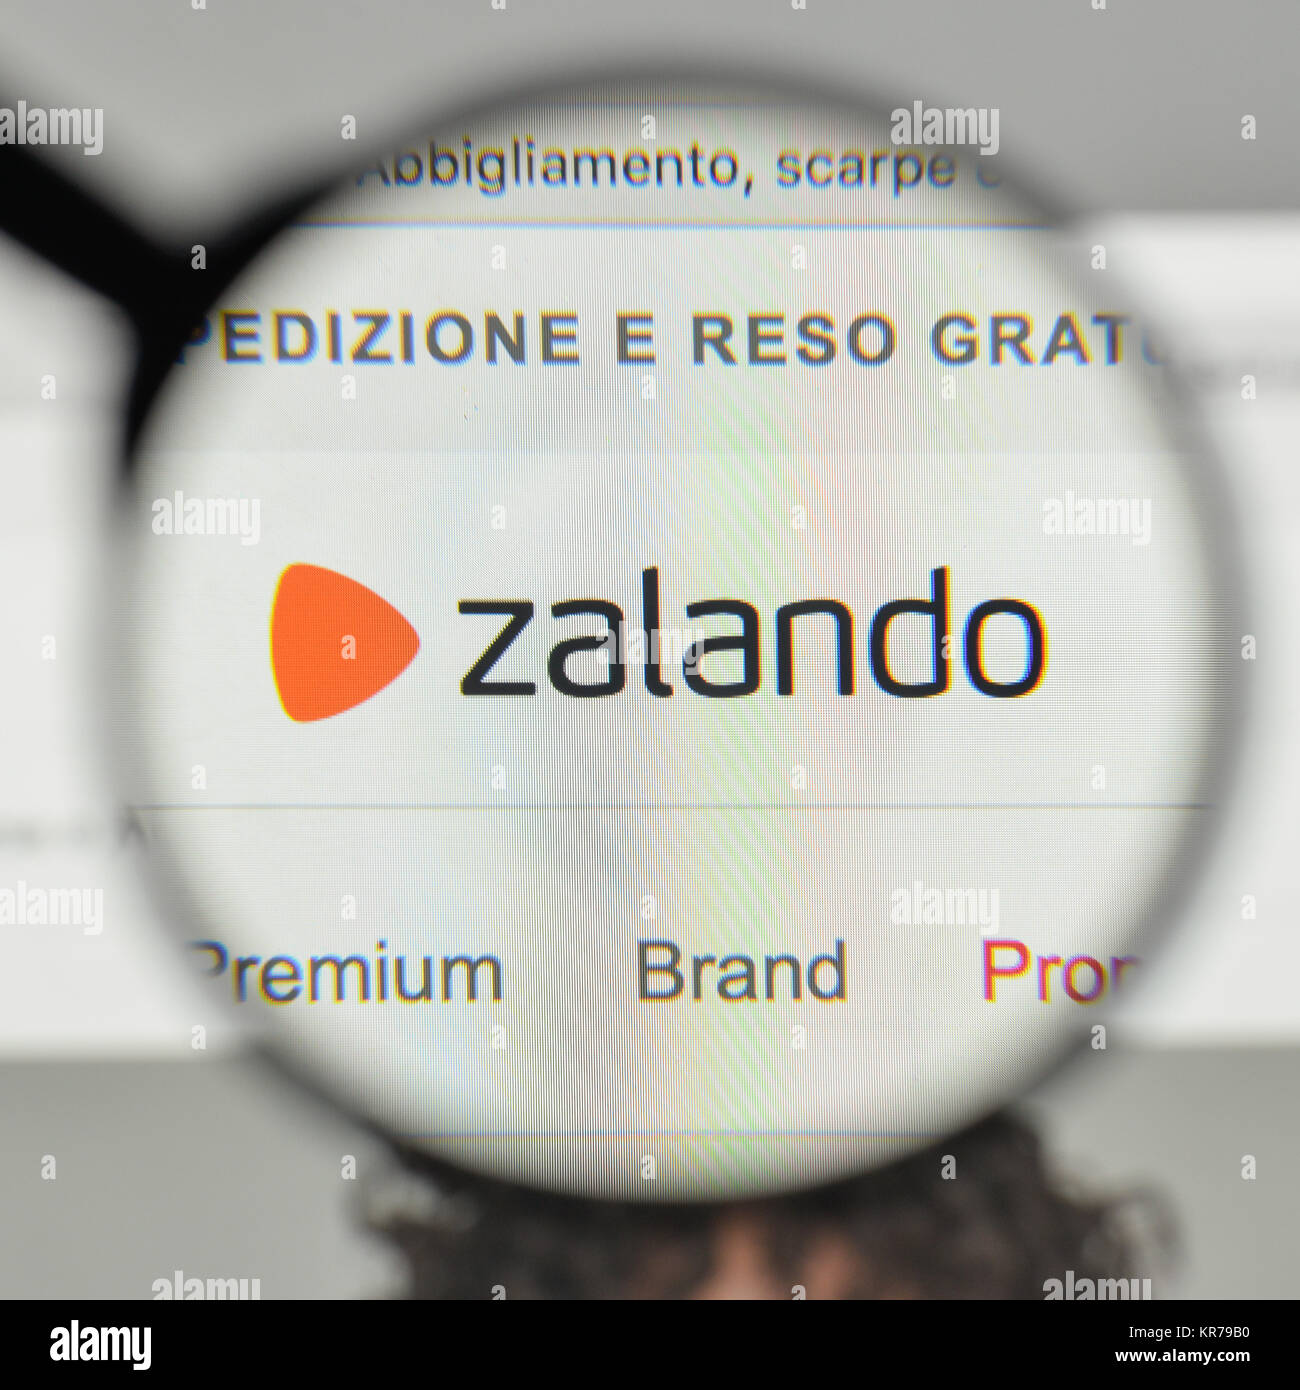 Zalando logo hi-res stock photography and images - Alamy